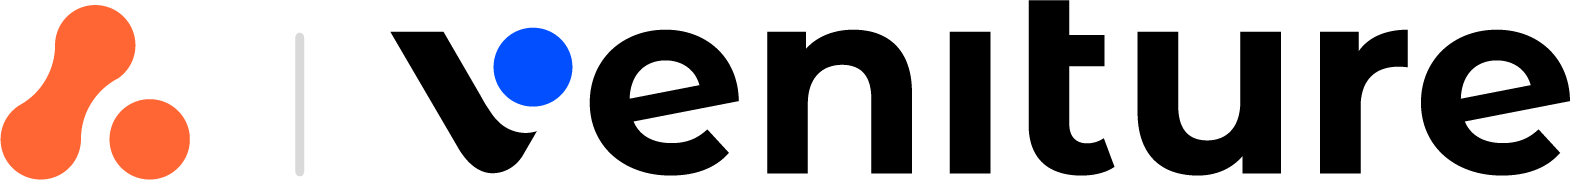 Veniture GmbH logo